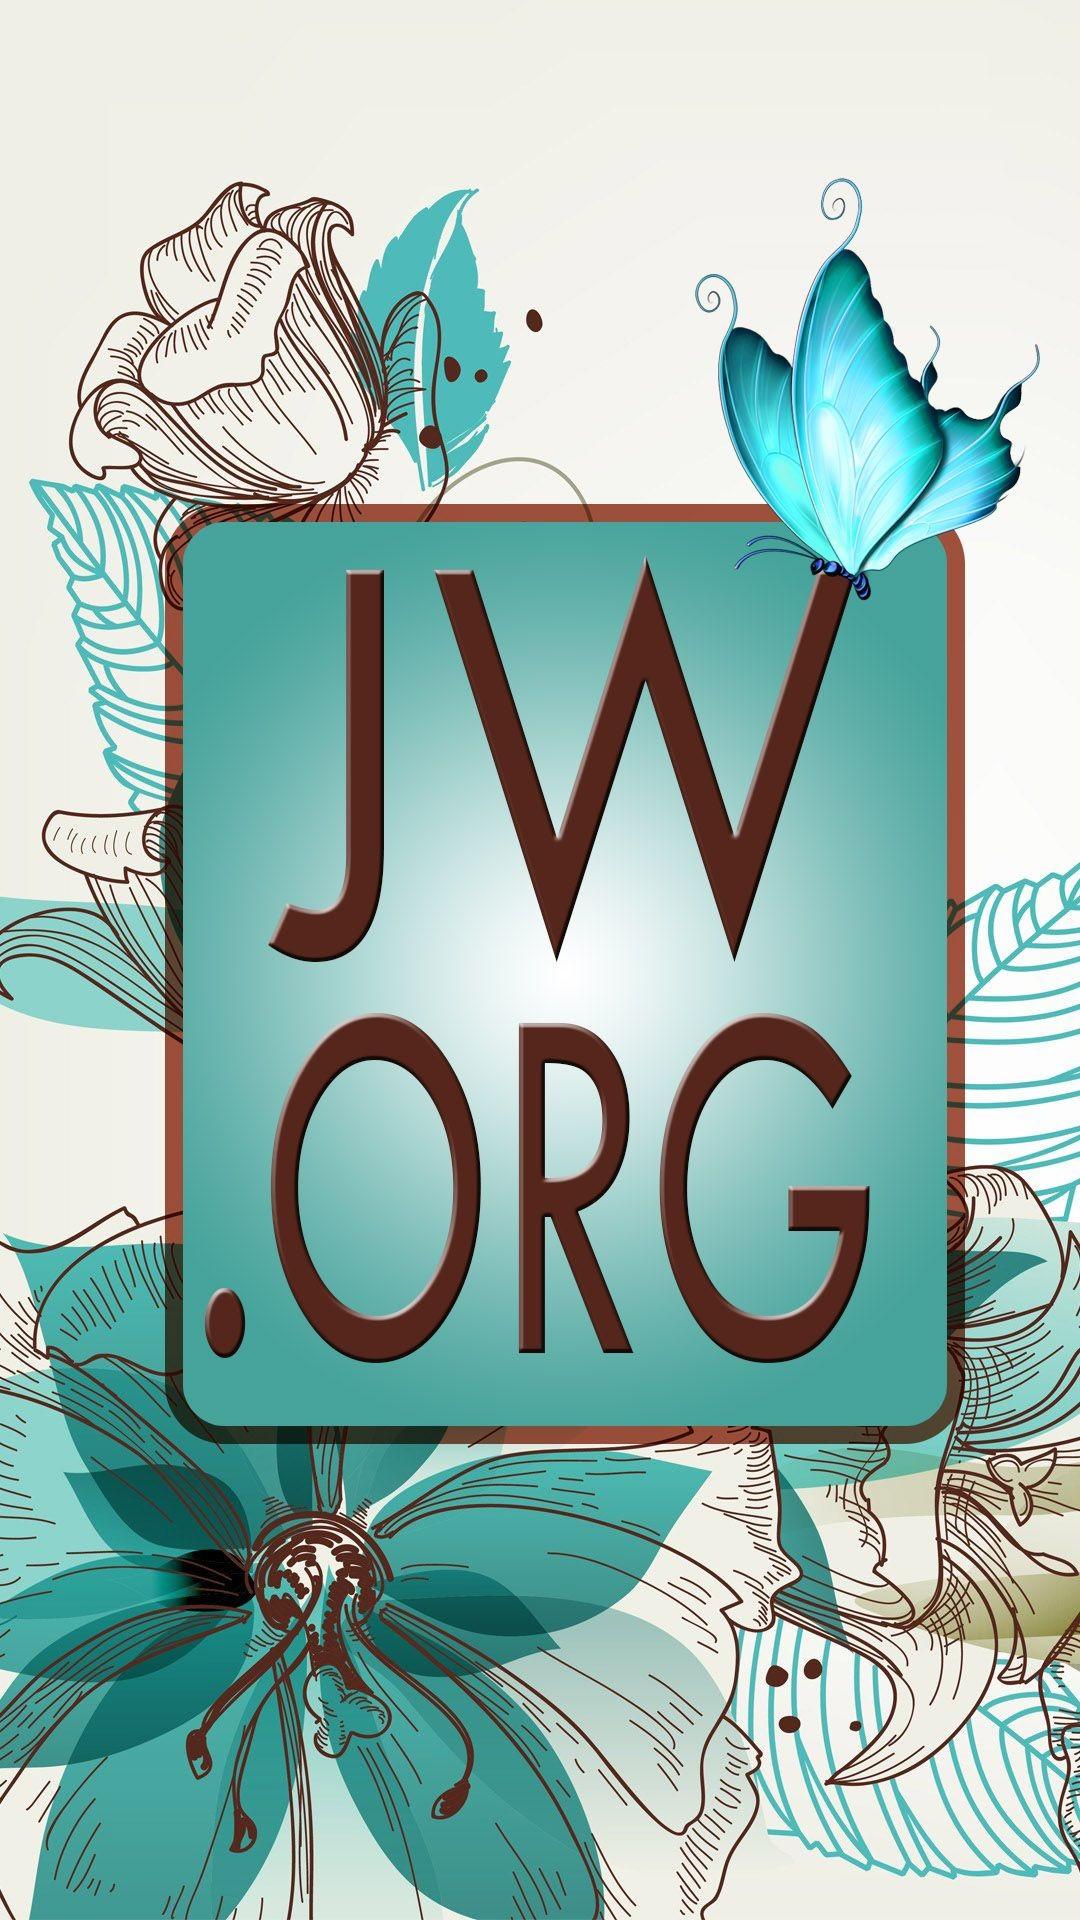 Jehovahs Witnesses Wallpaper